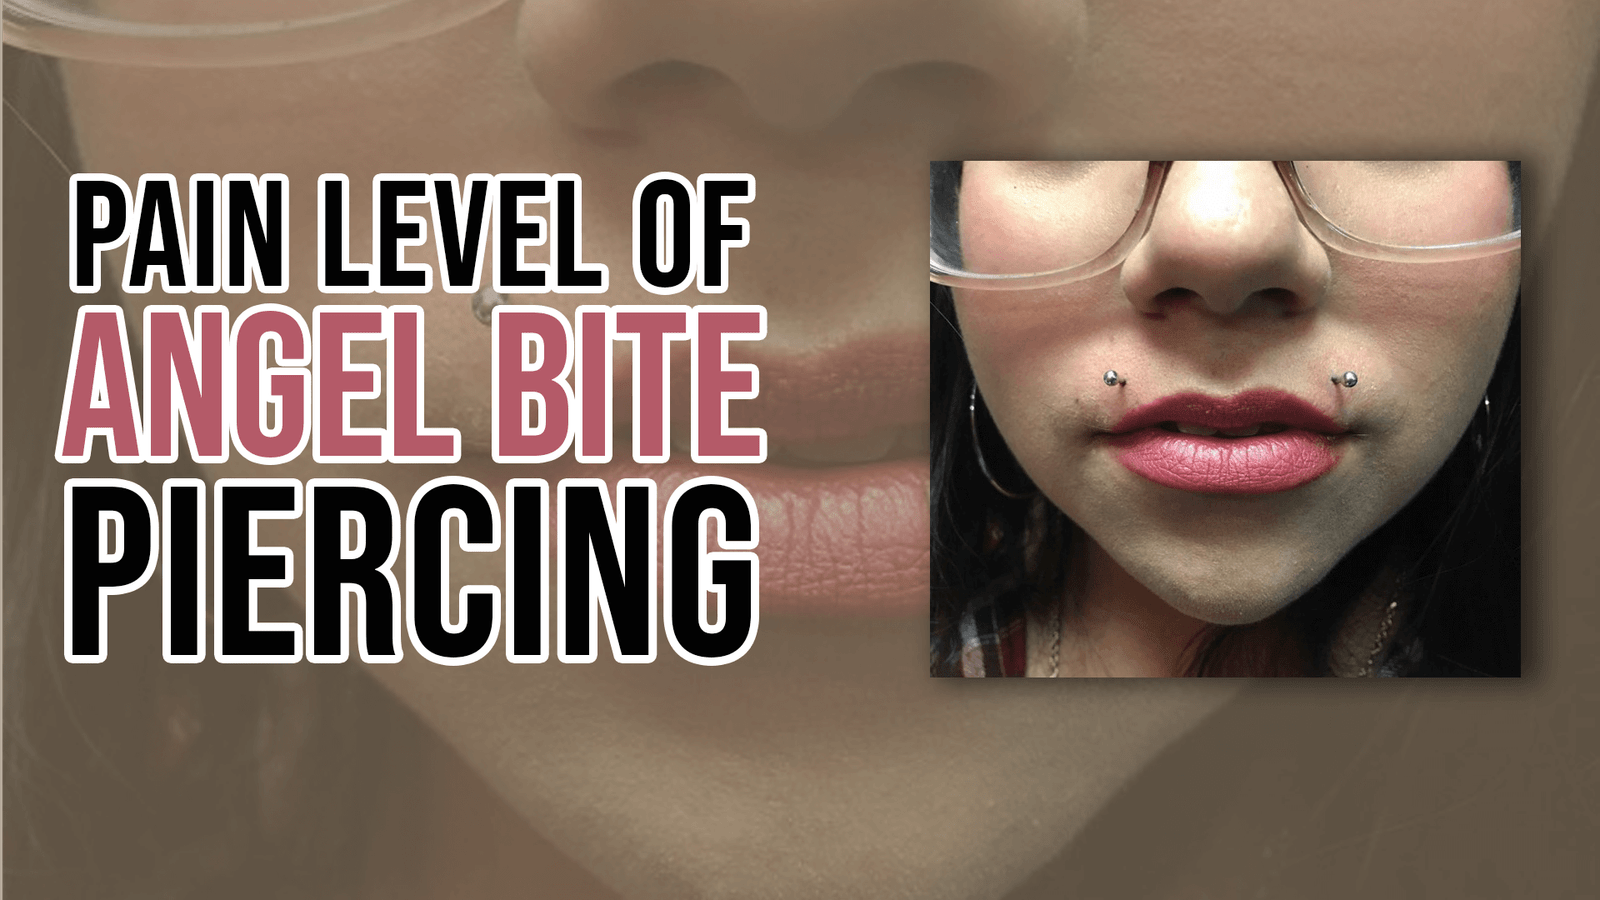 Pain Level of Angel Bite Piercing